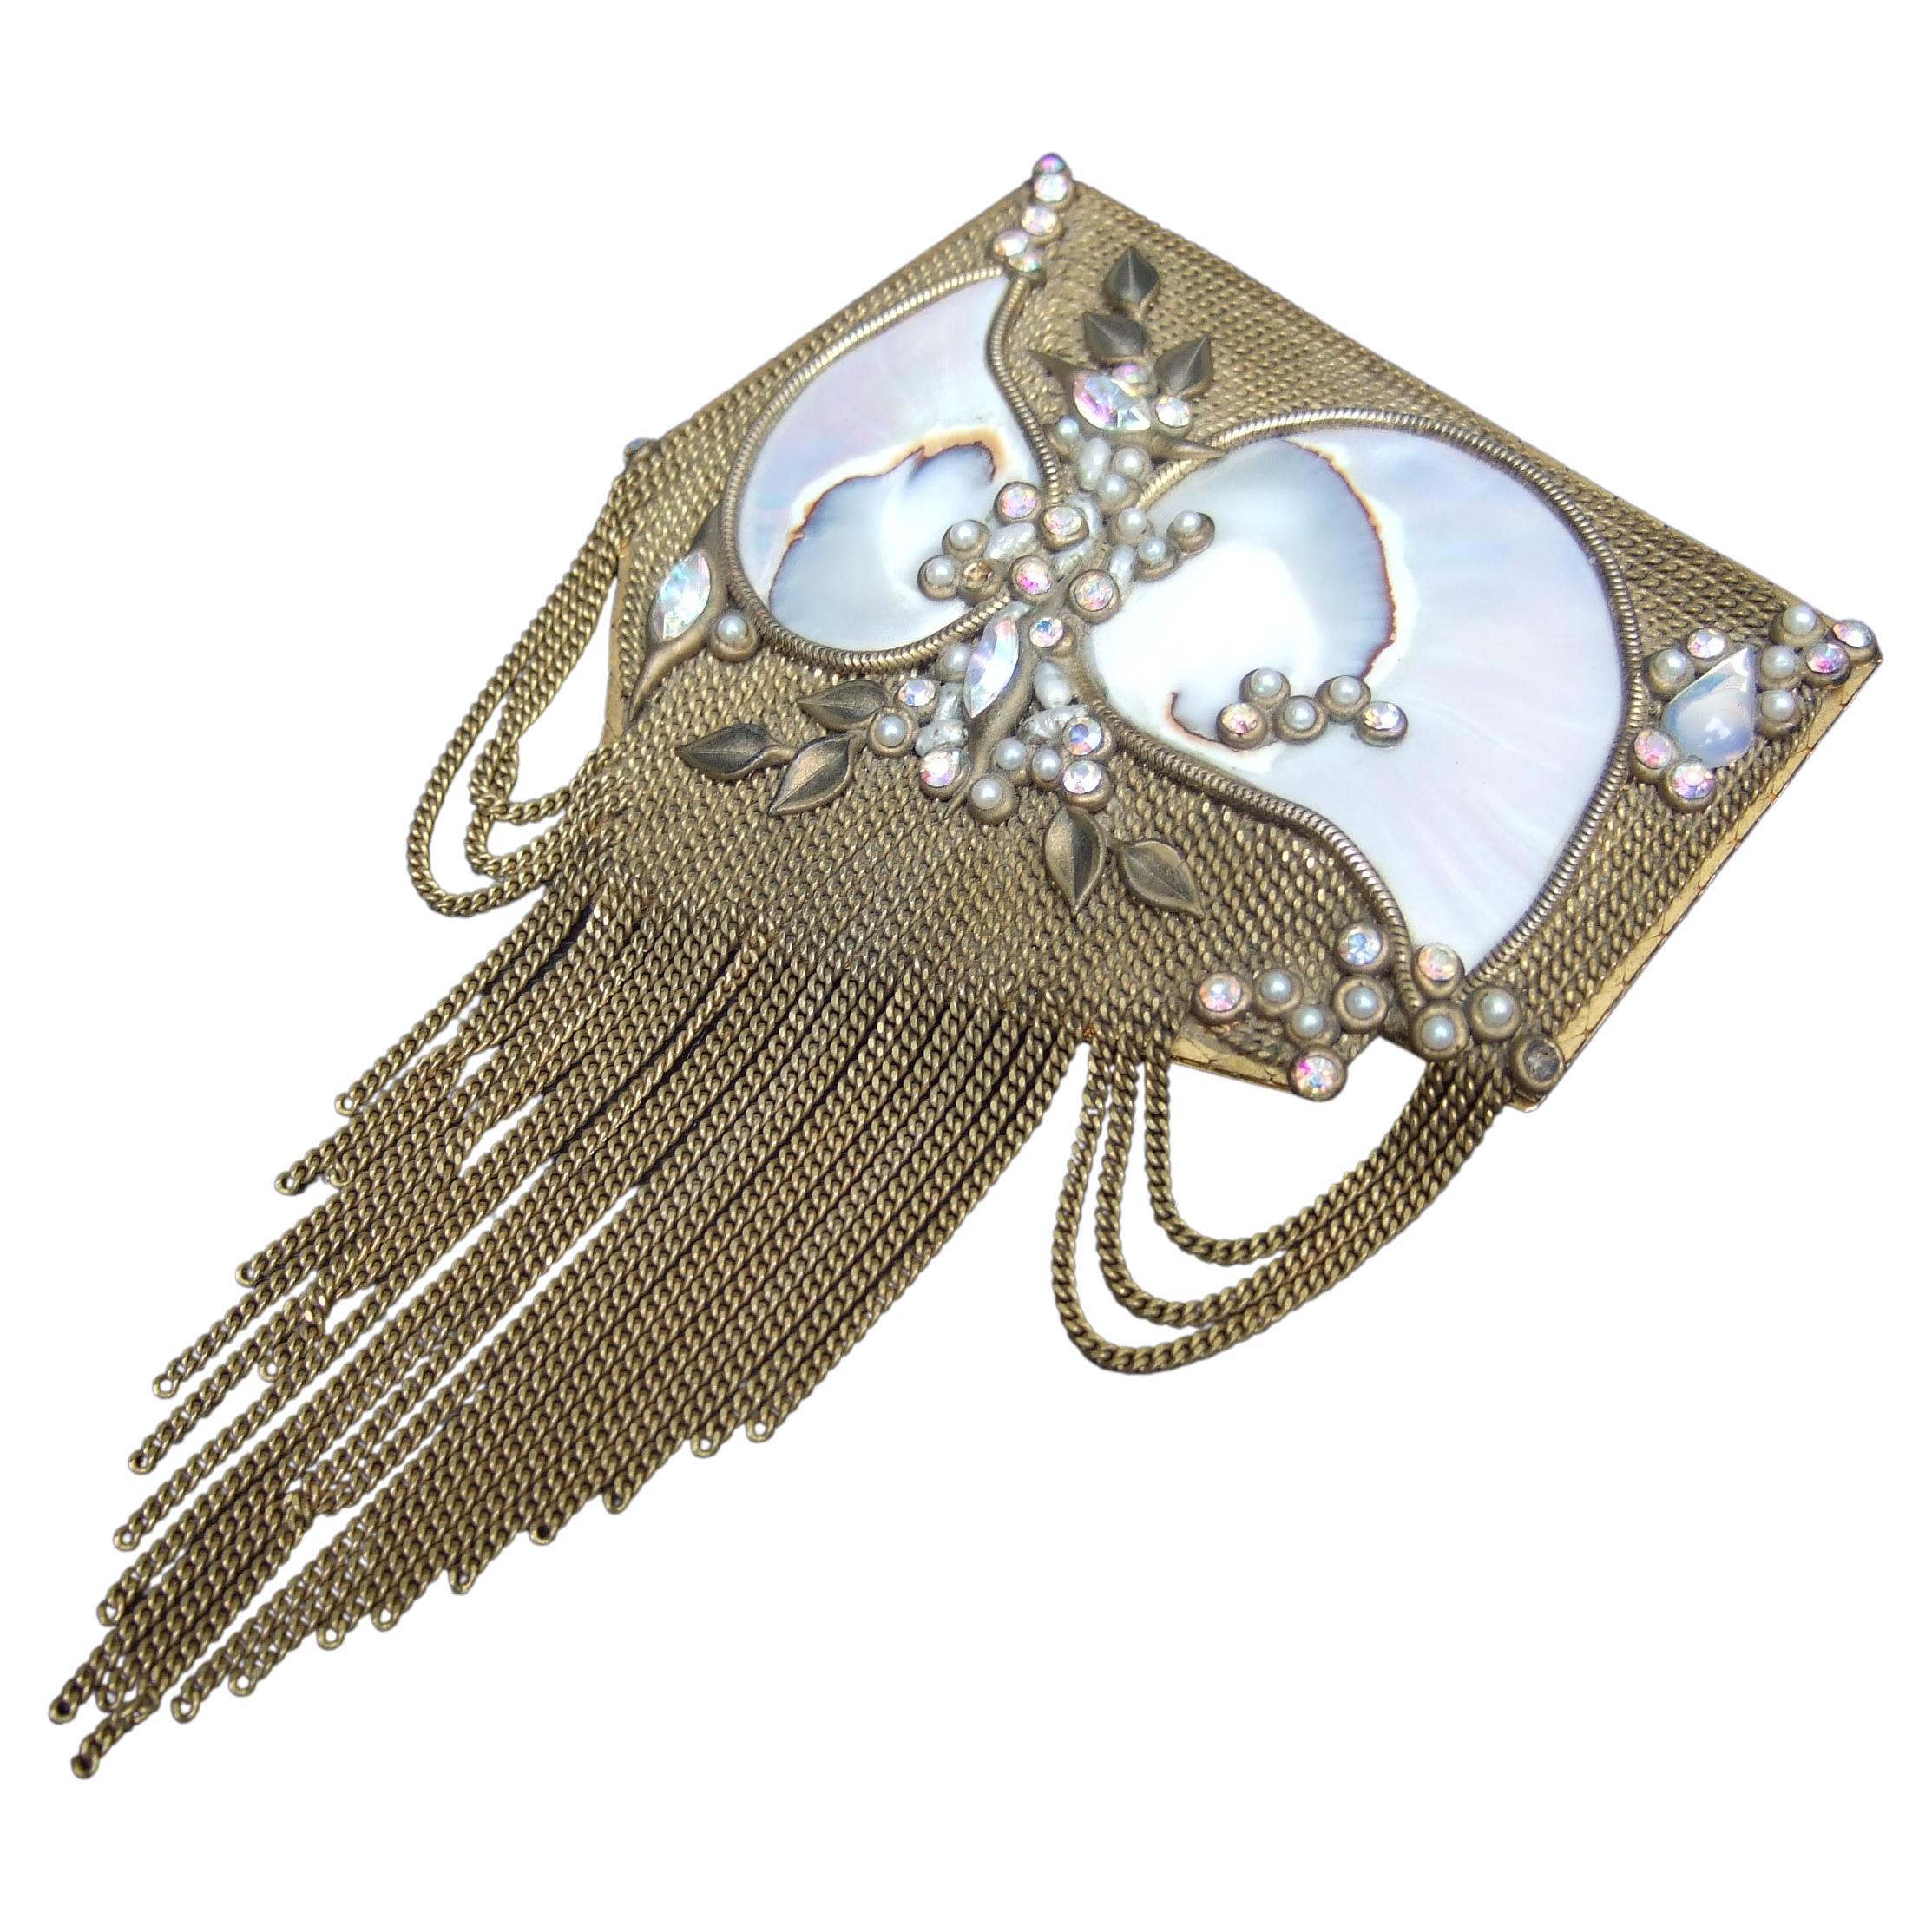  Mother of Pearl Jeweled Artisan Massive Gilt Metal Tassel Brooch c 1970s For Sale